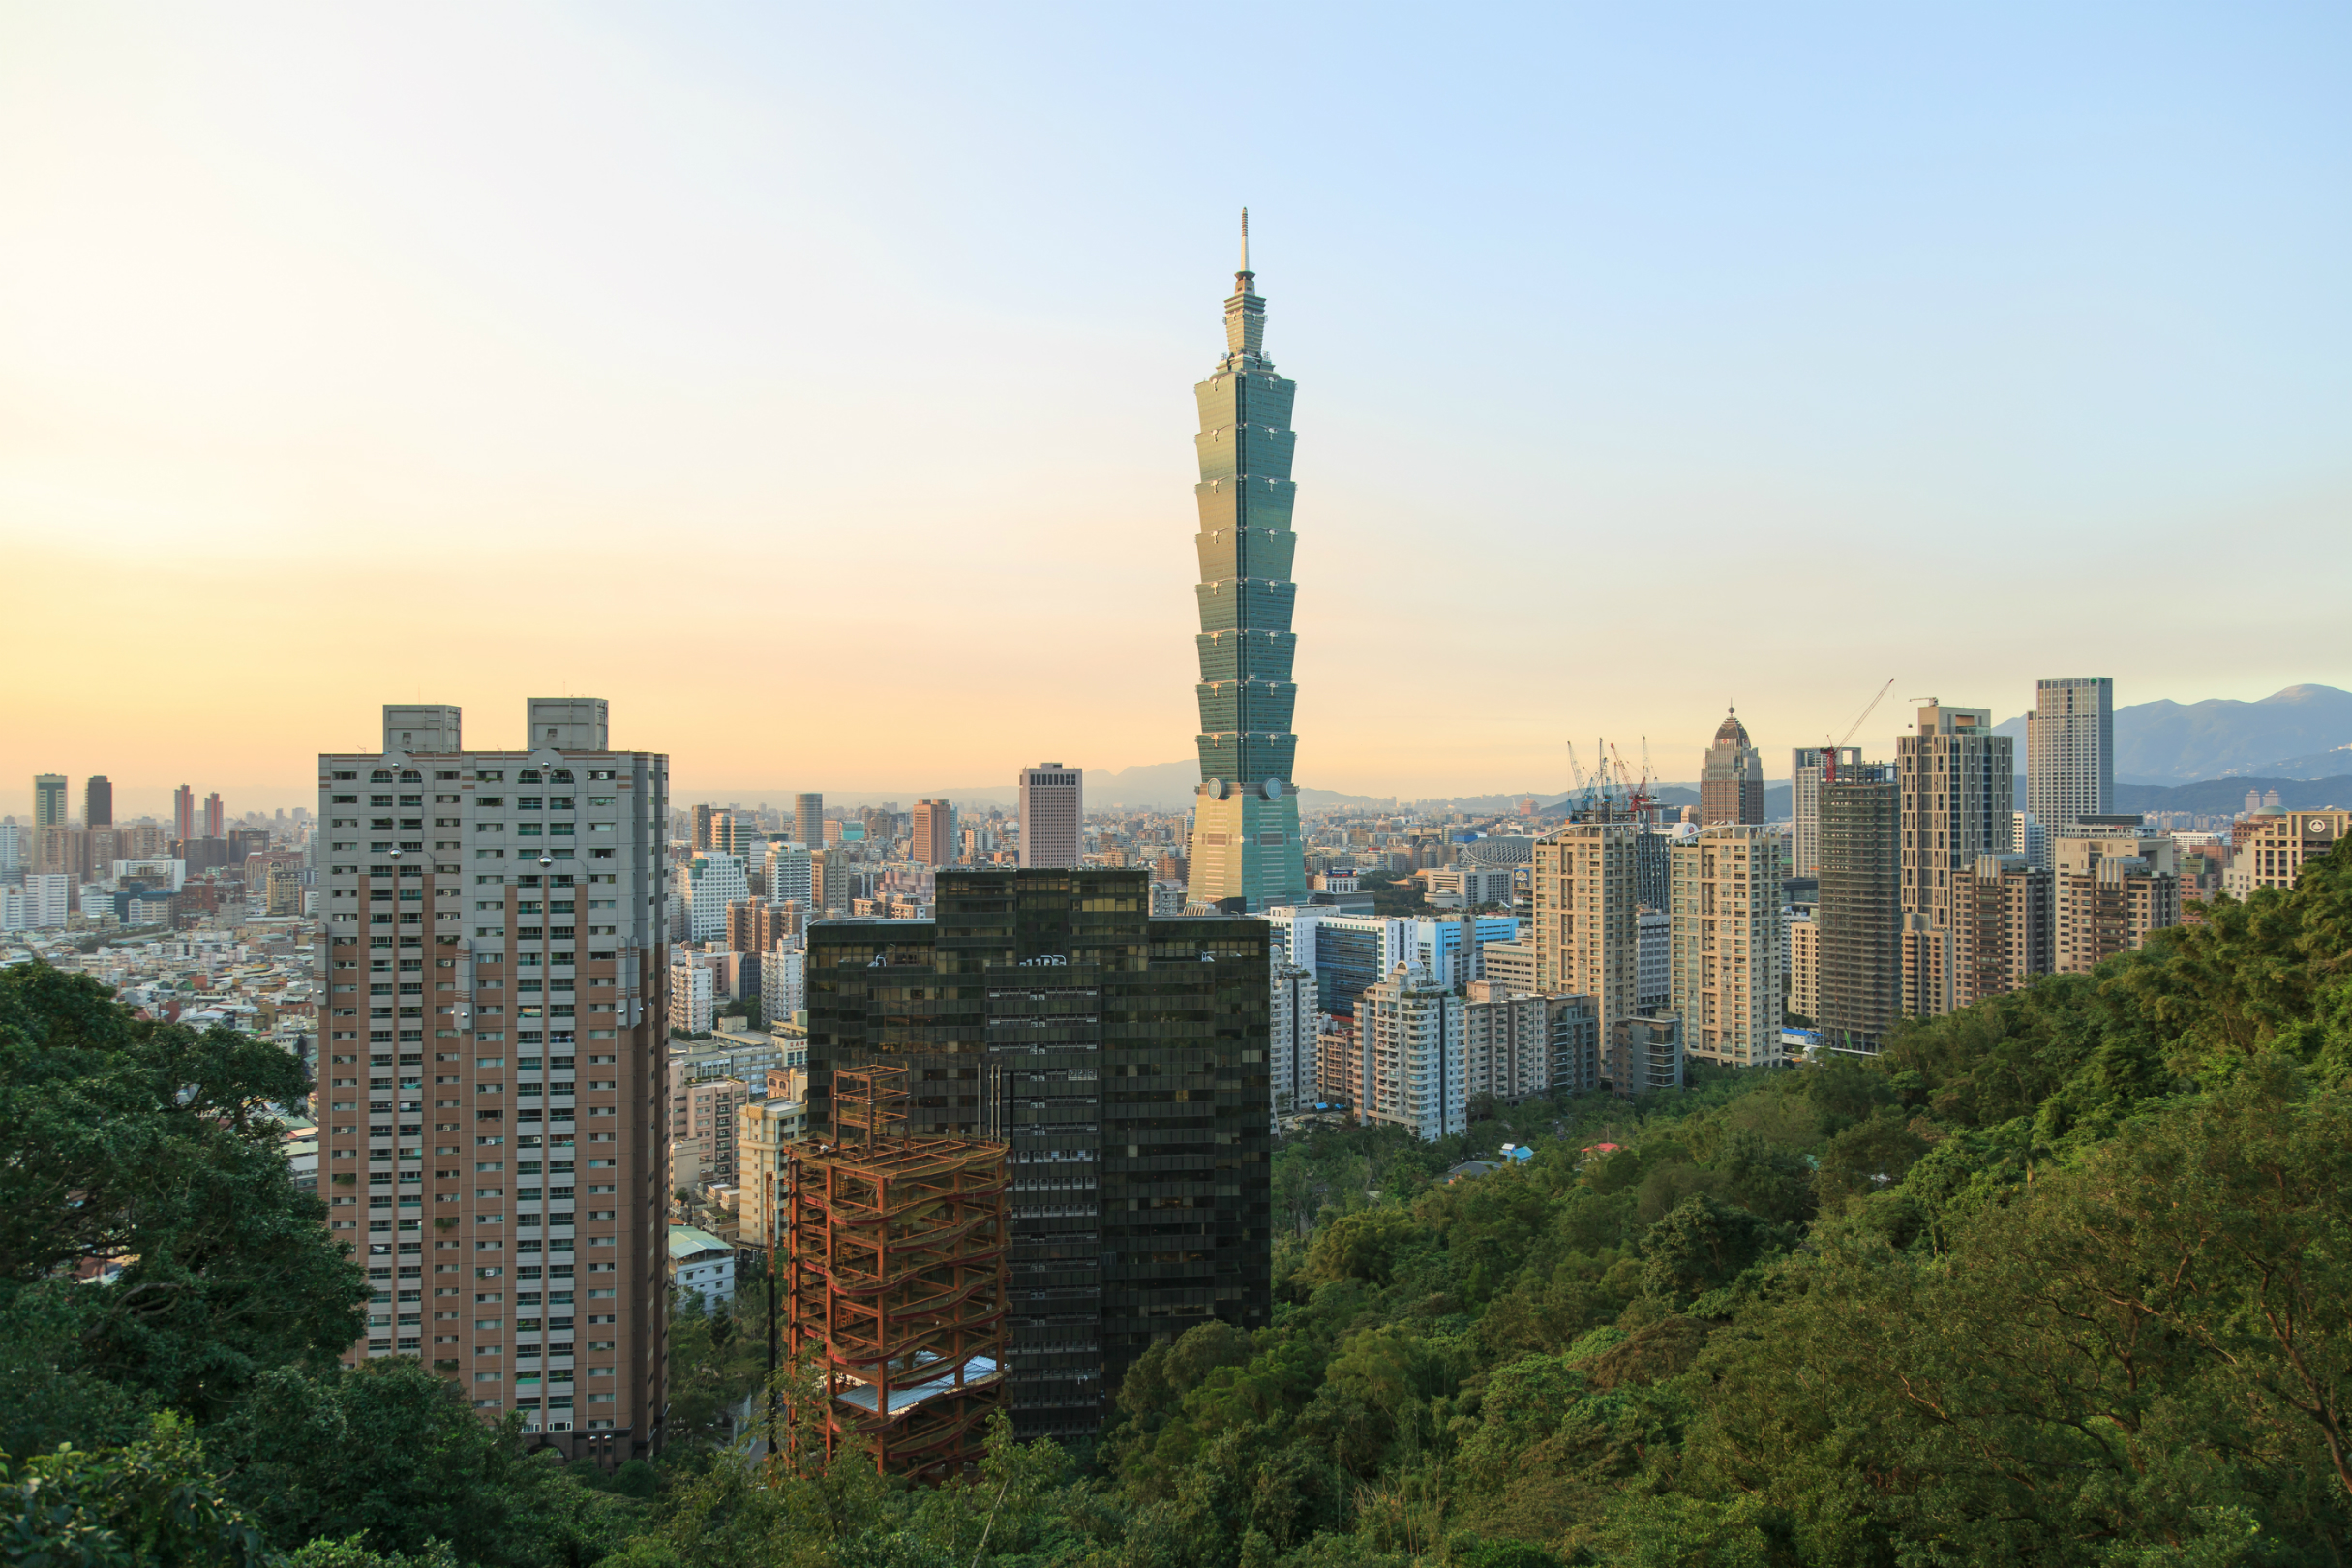 earthquake resistant buildings taipei taiwan 101 tower 01